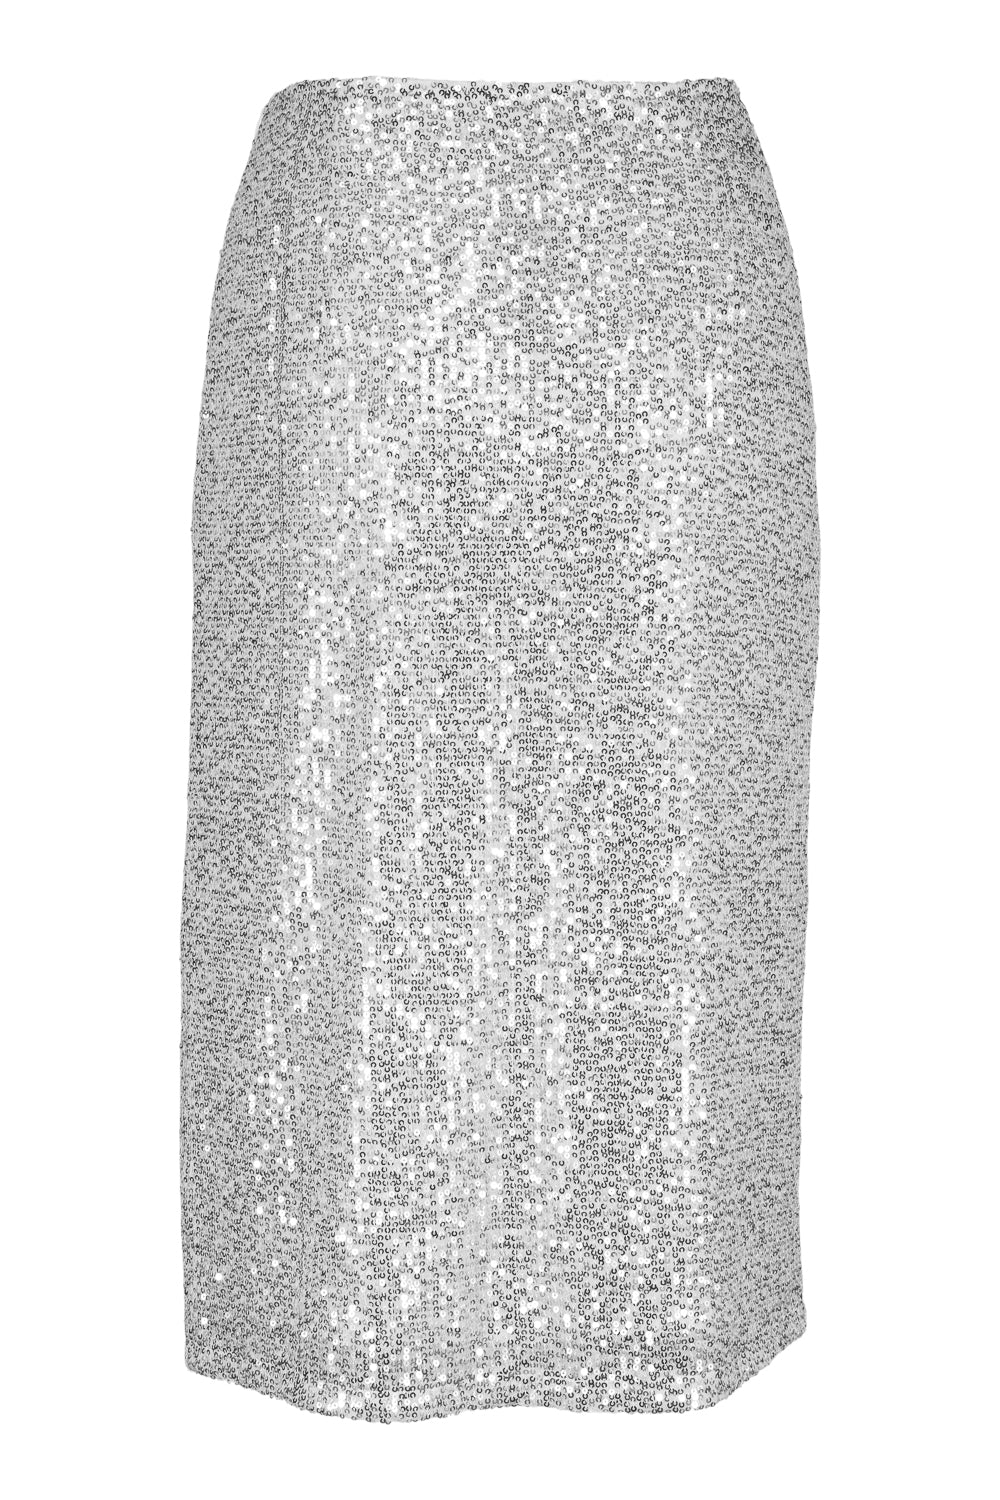 Adeline Skirt Silver Sequins